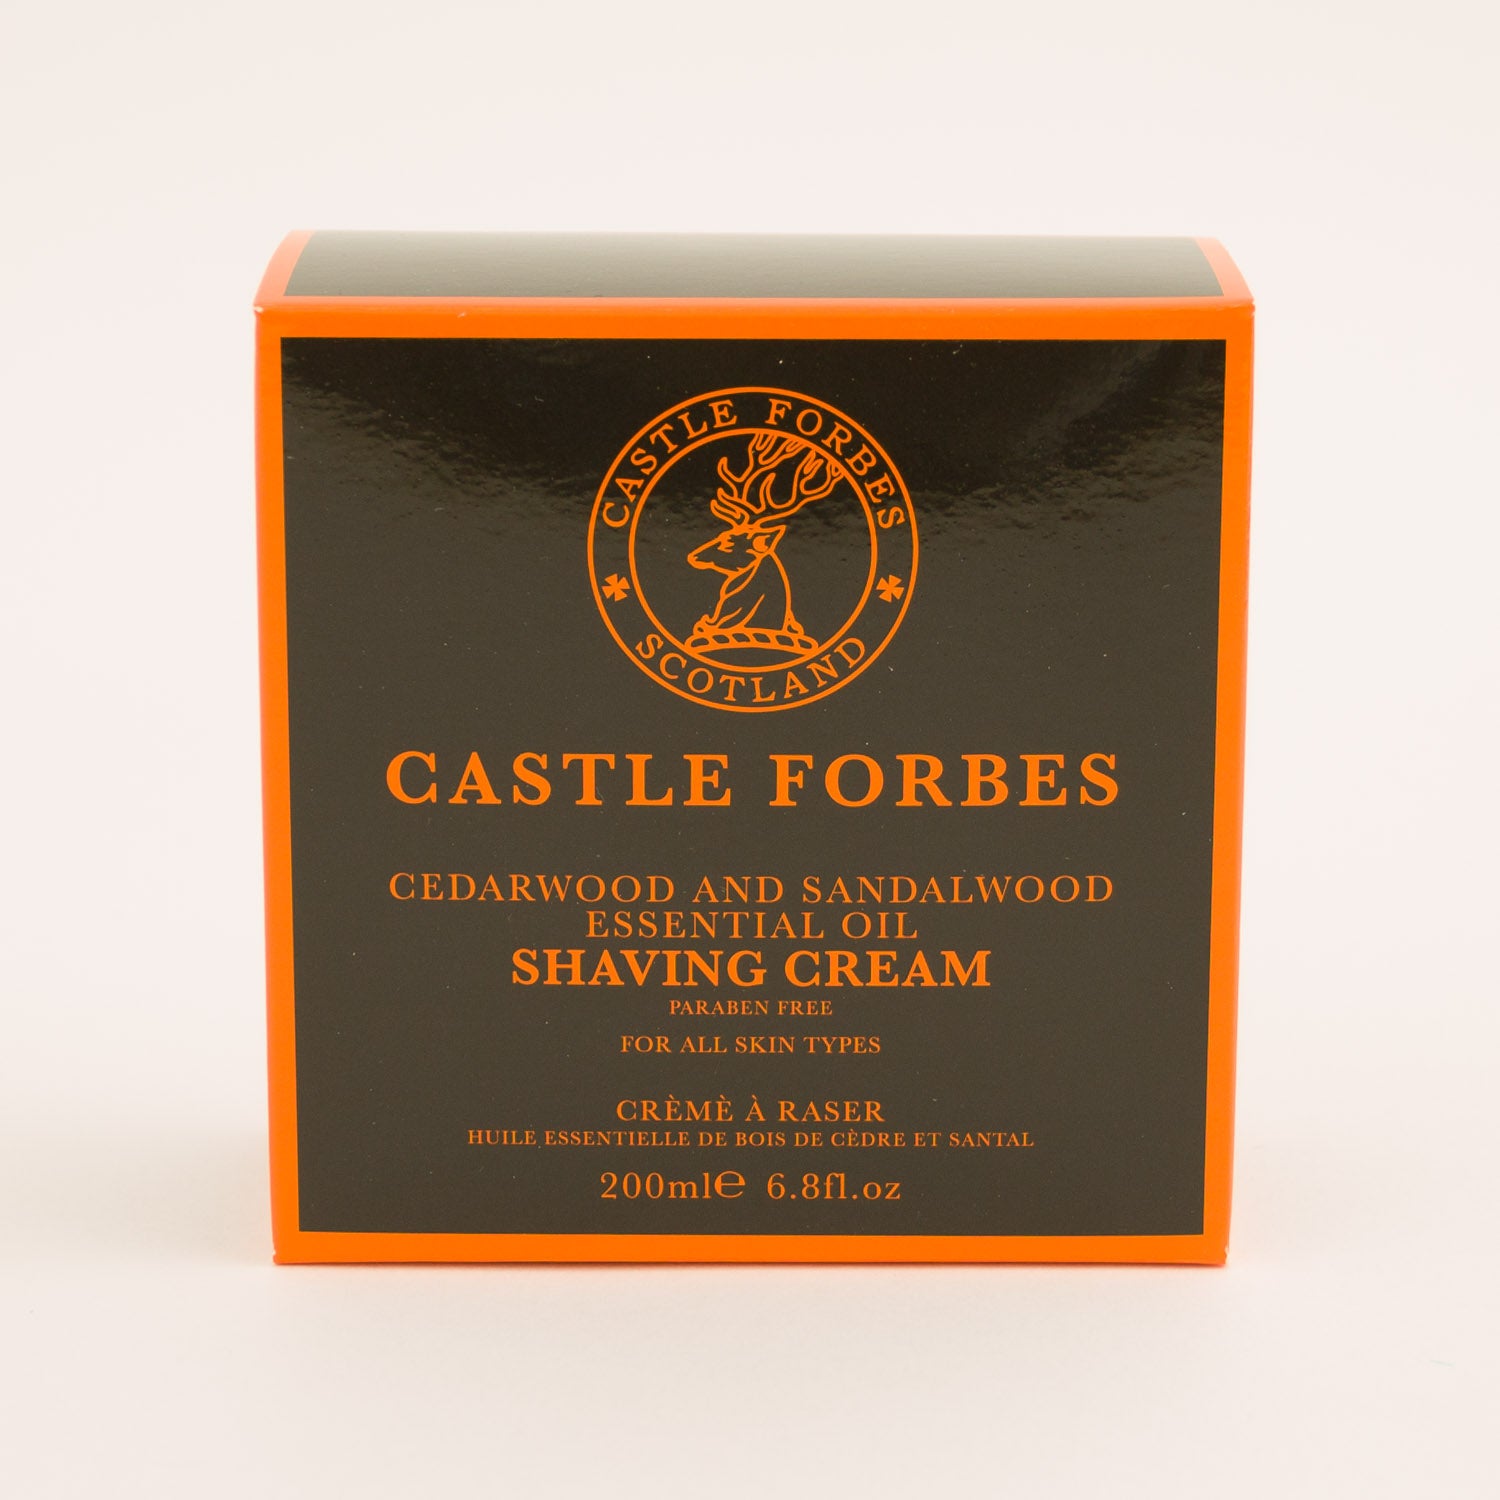 Castle Forbes Cedarwood and Sandalwood Oil Shaving Cream